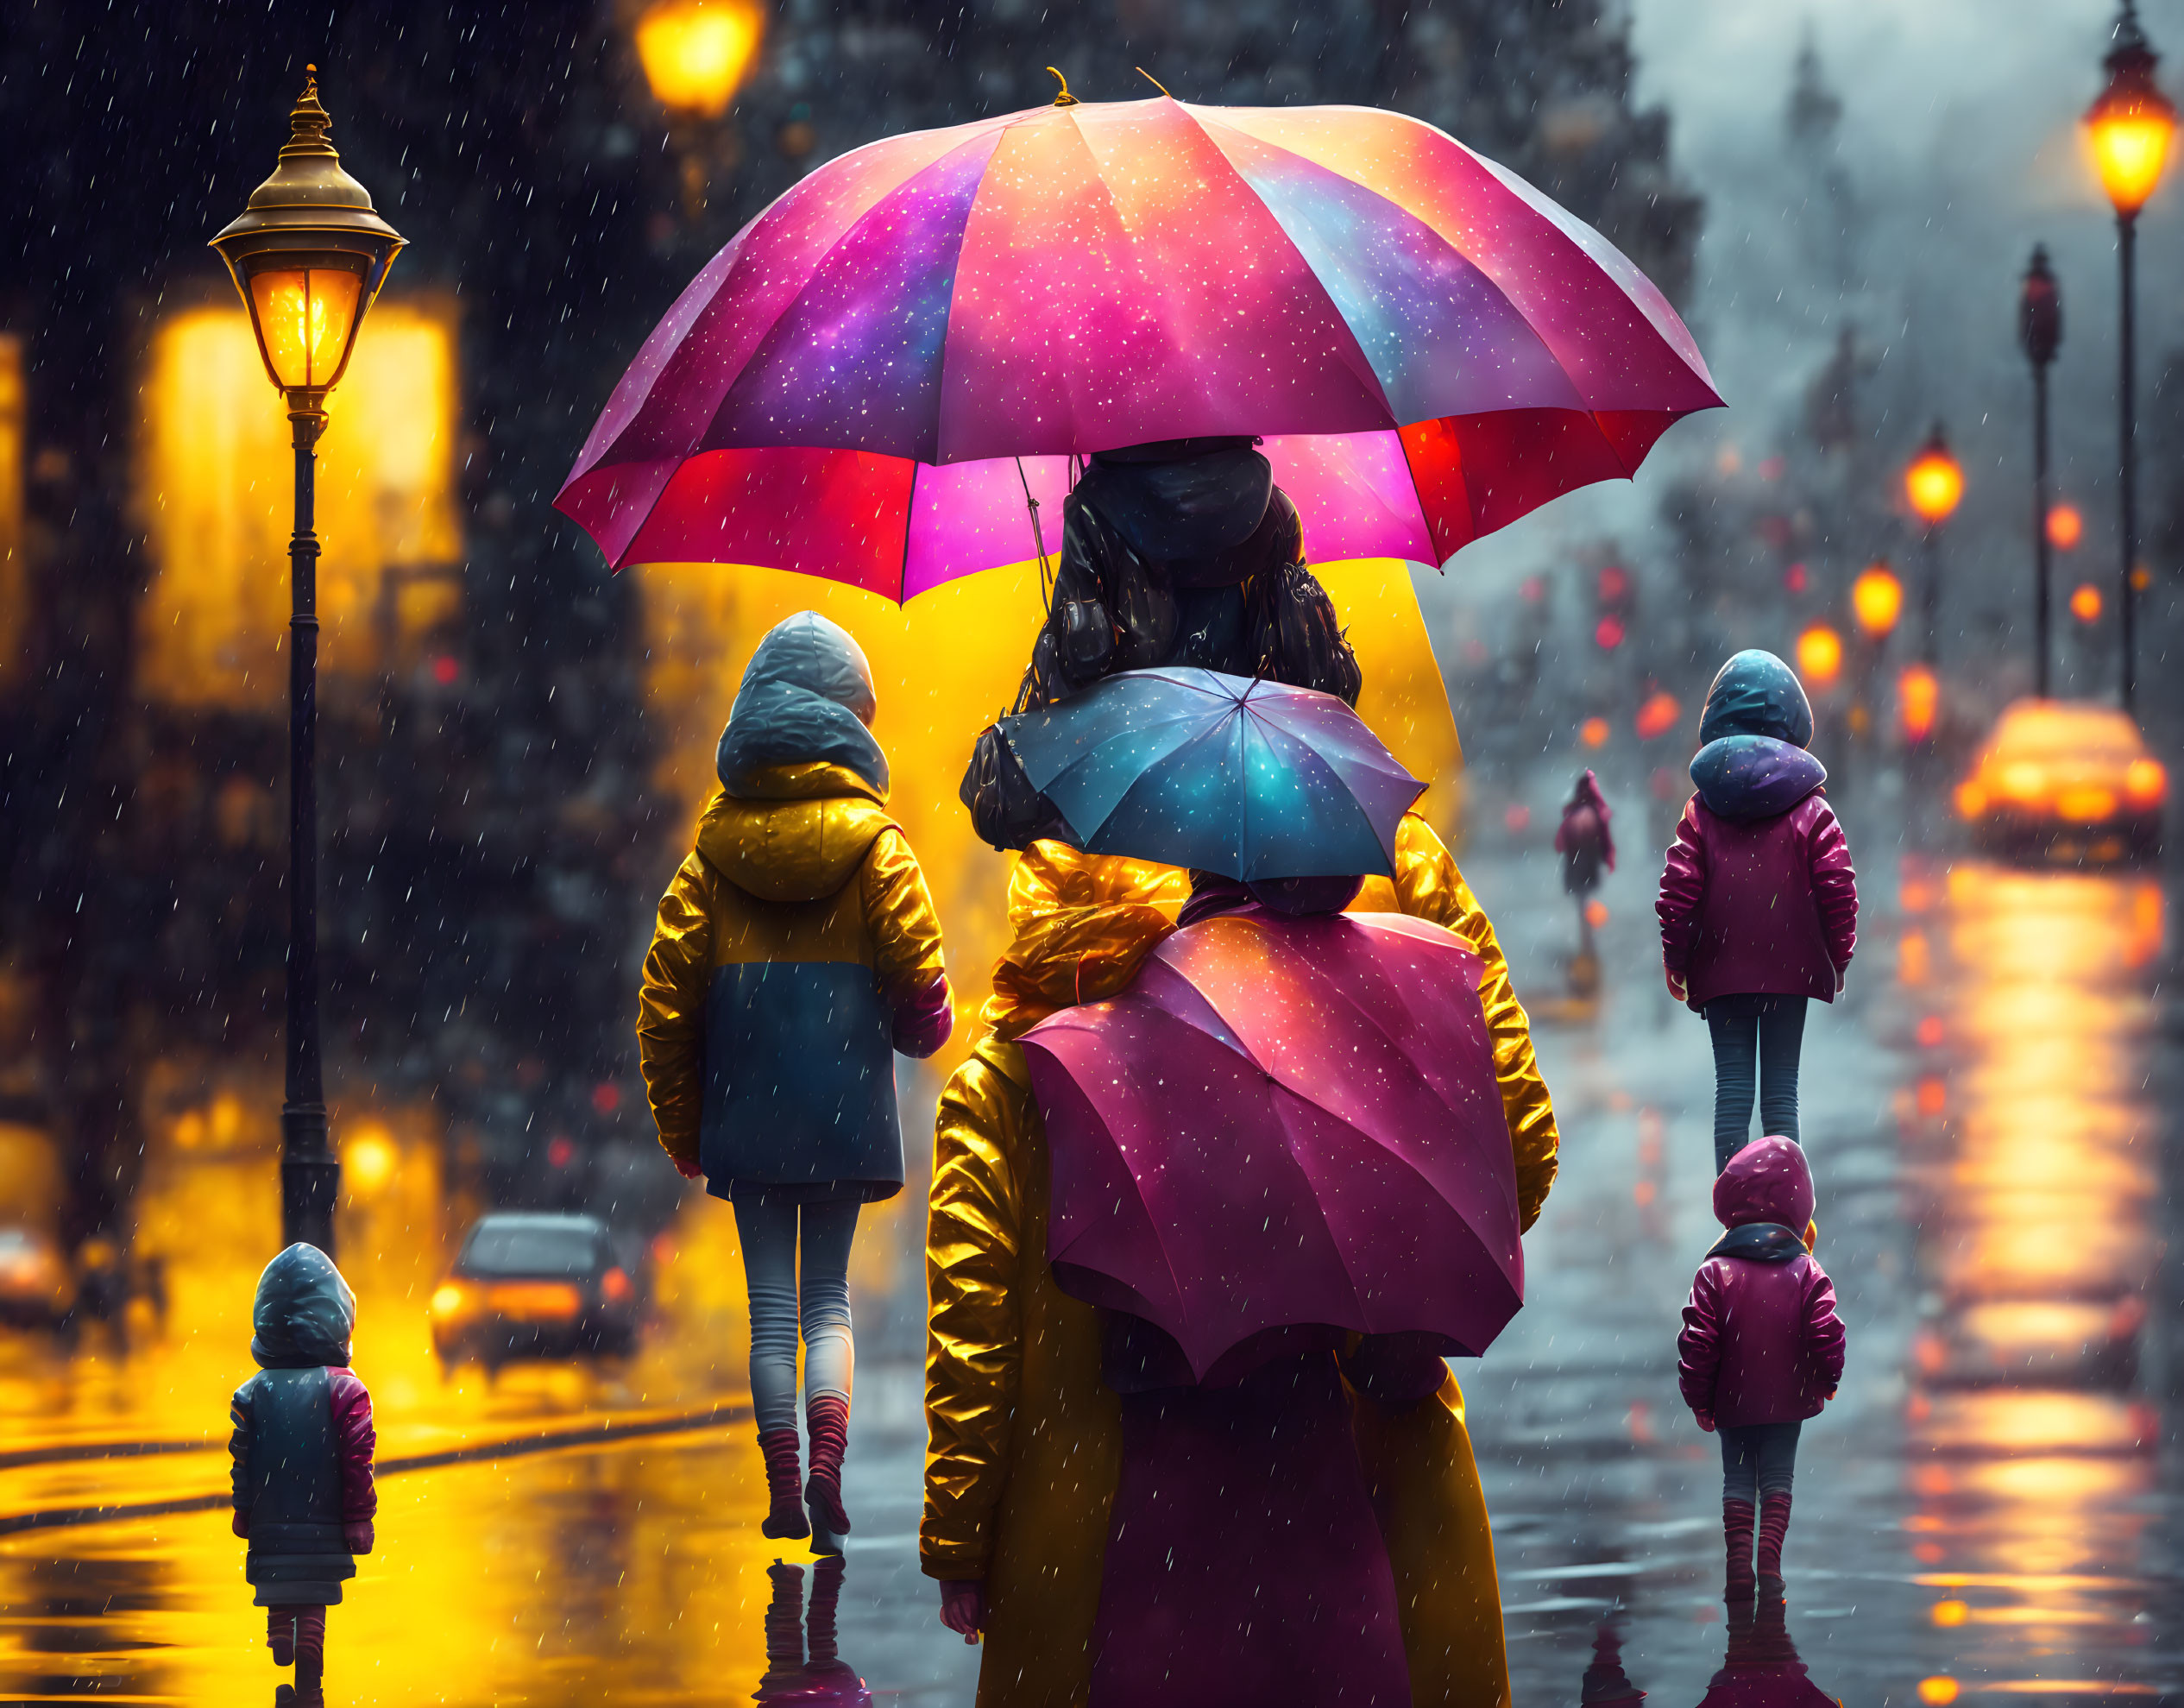 Walking with umbrellas